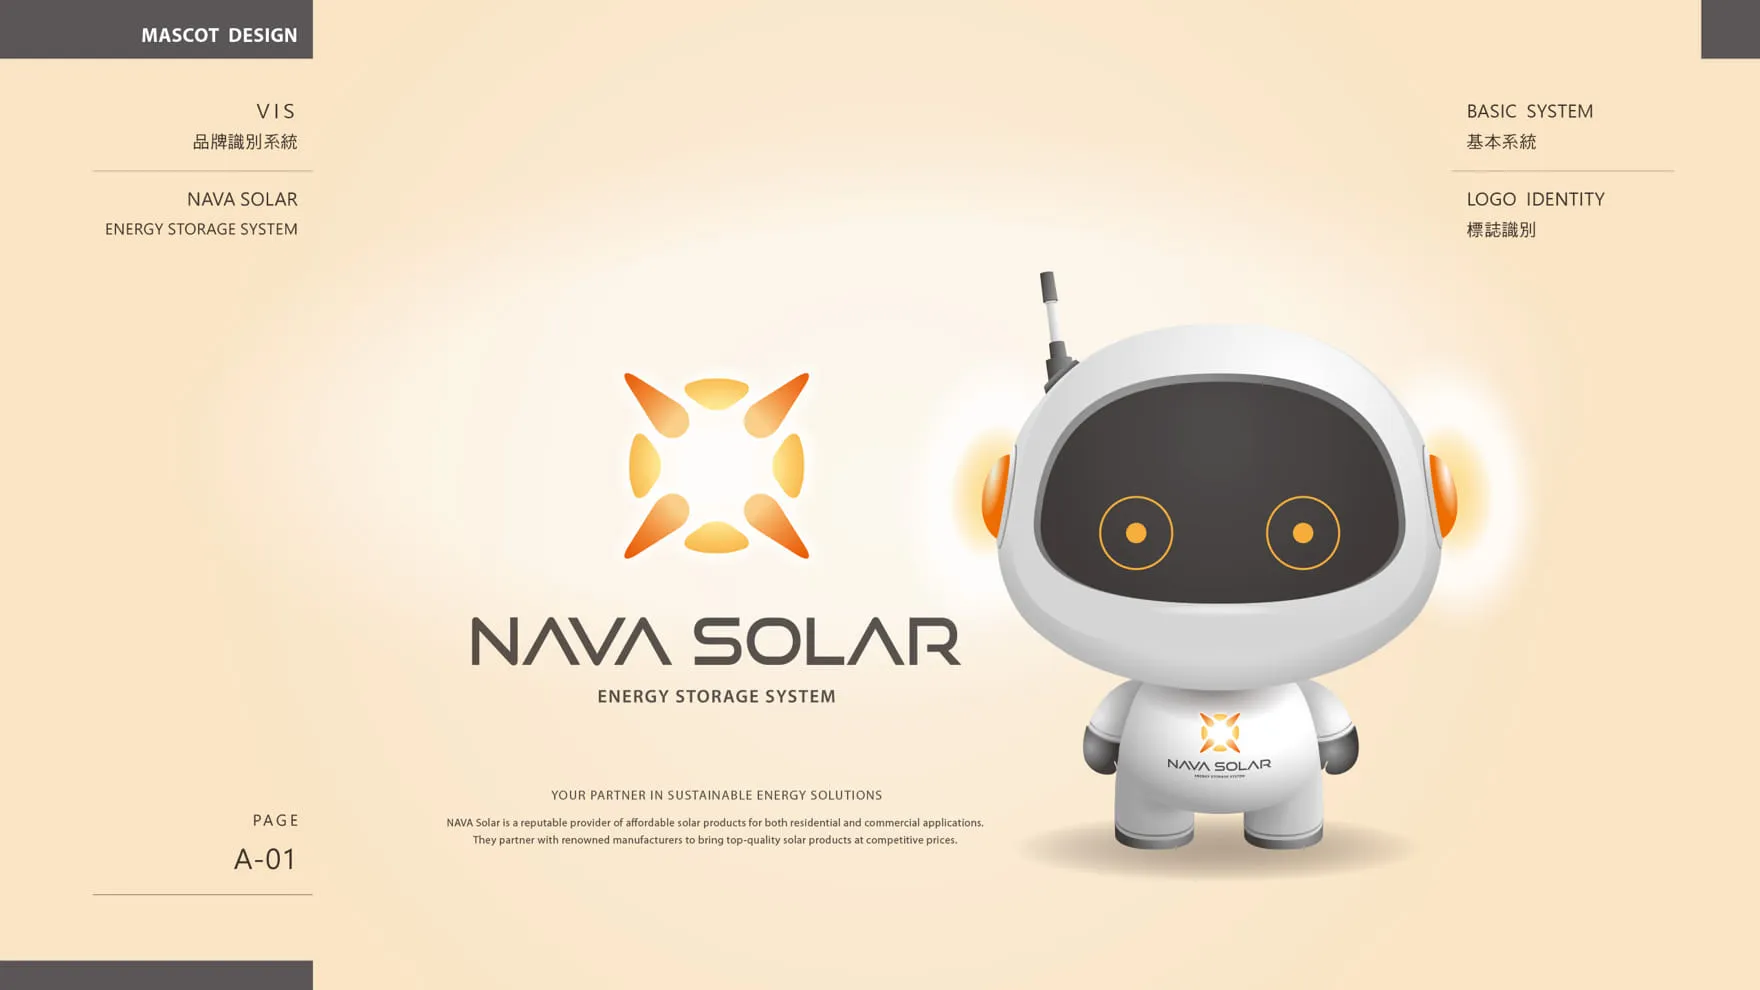 NAVA SOLAR 太陽能光電存儲LOGO品牌吉祥物設計 Mascot design